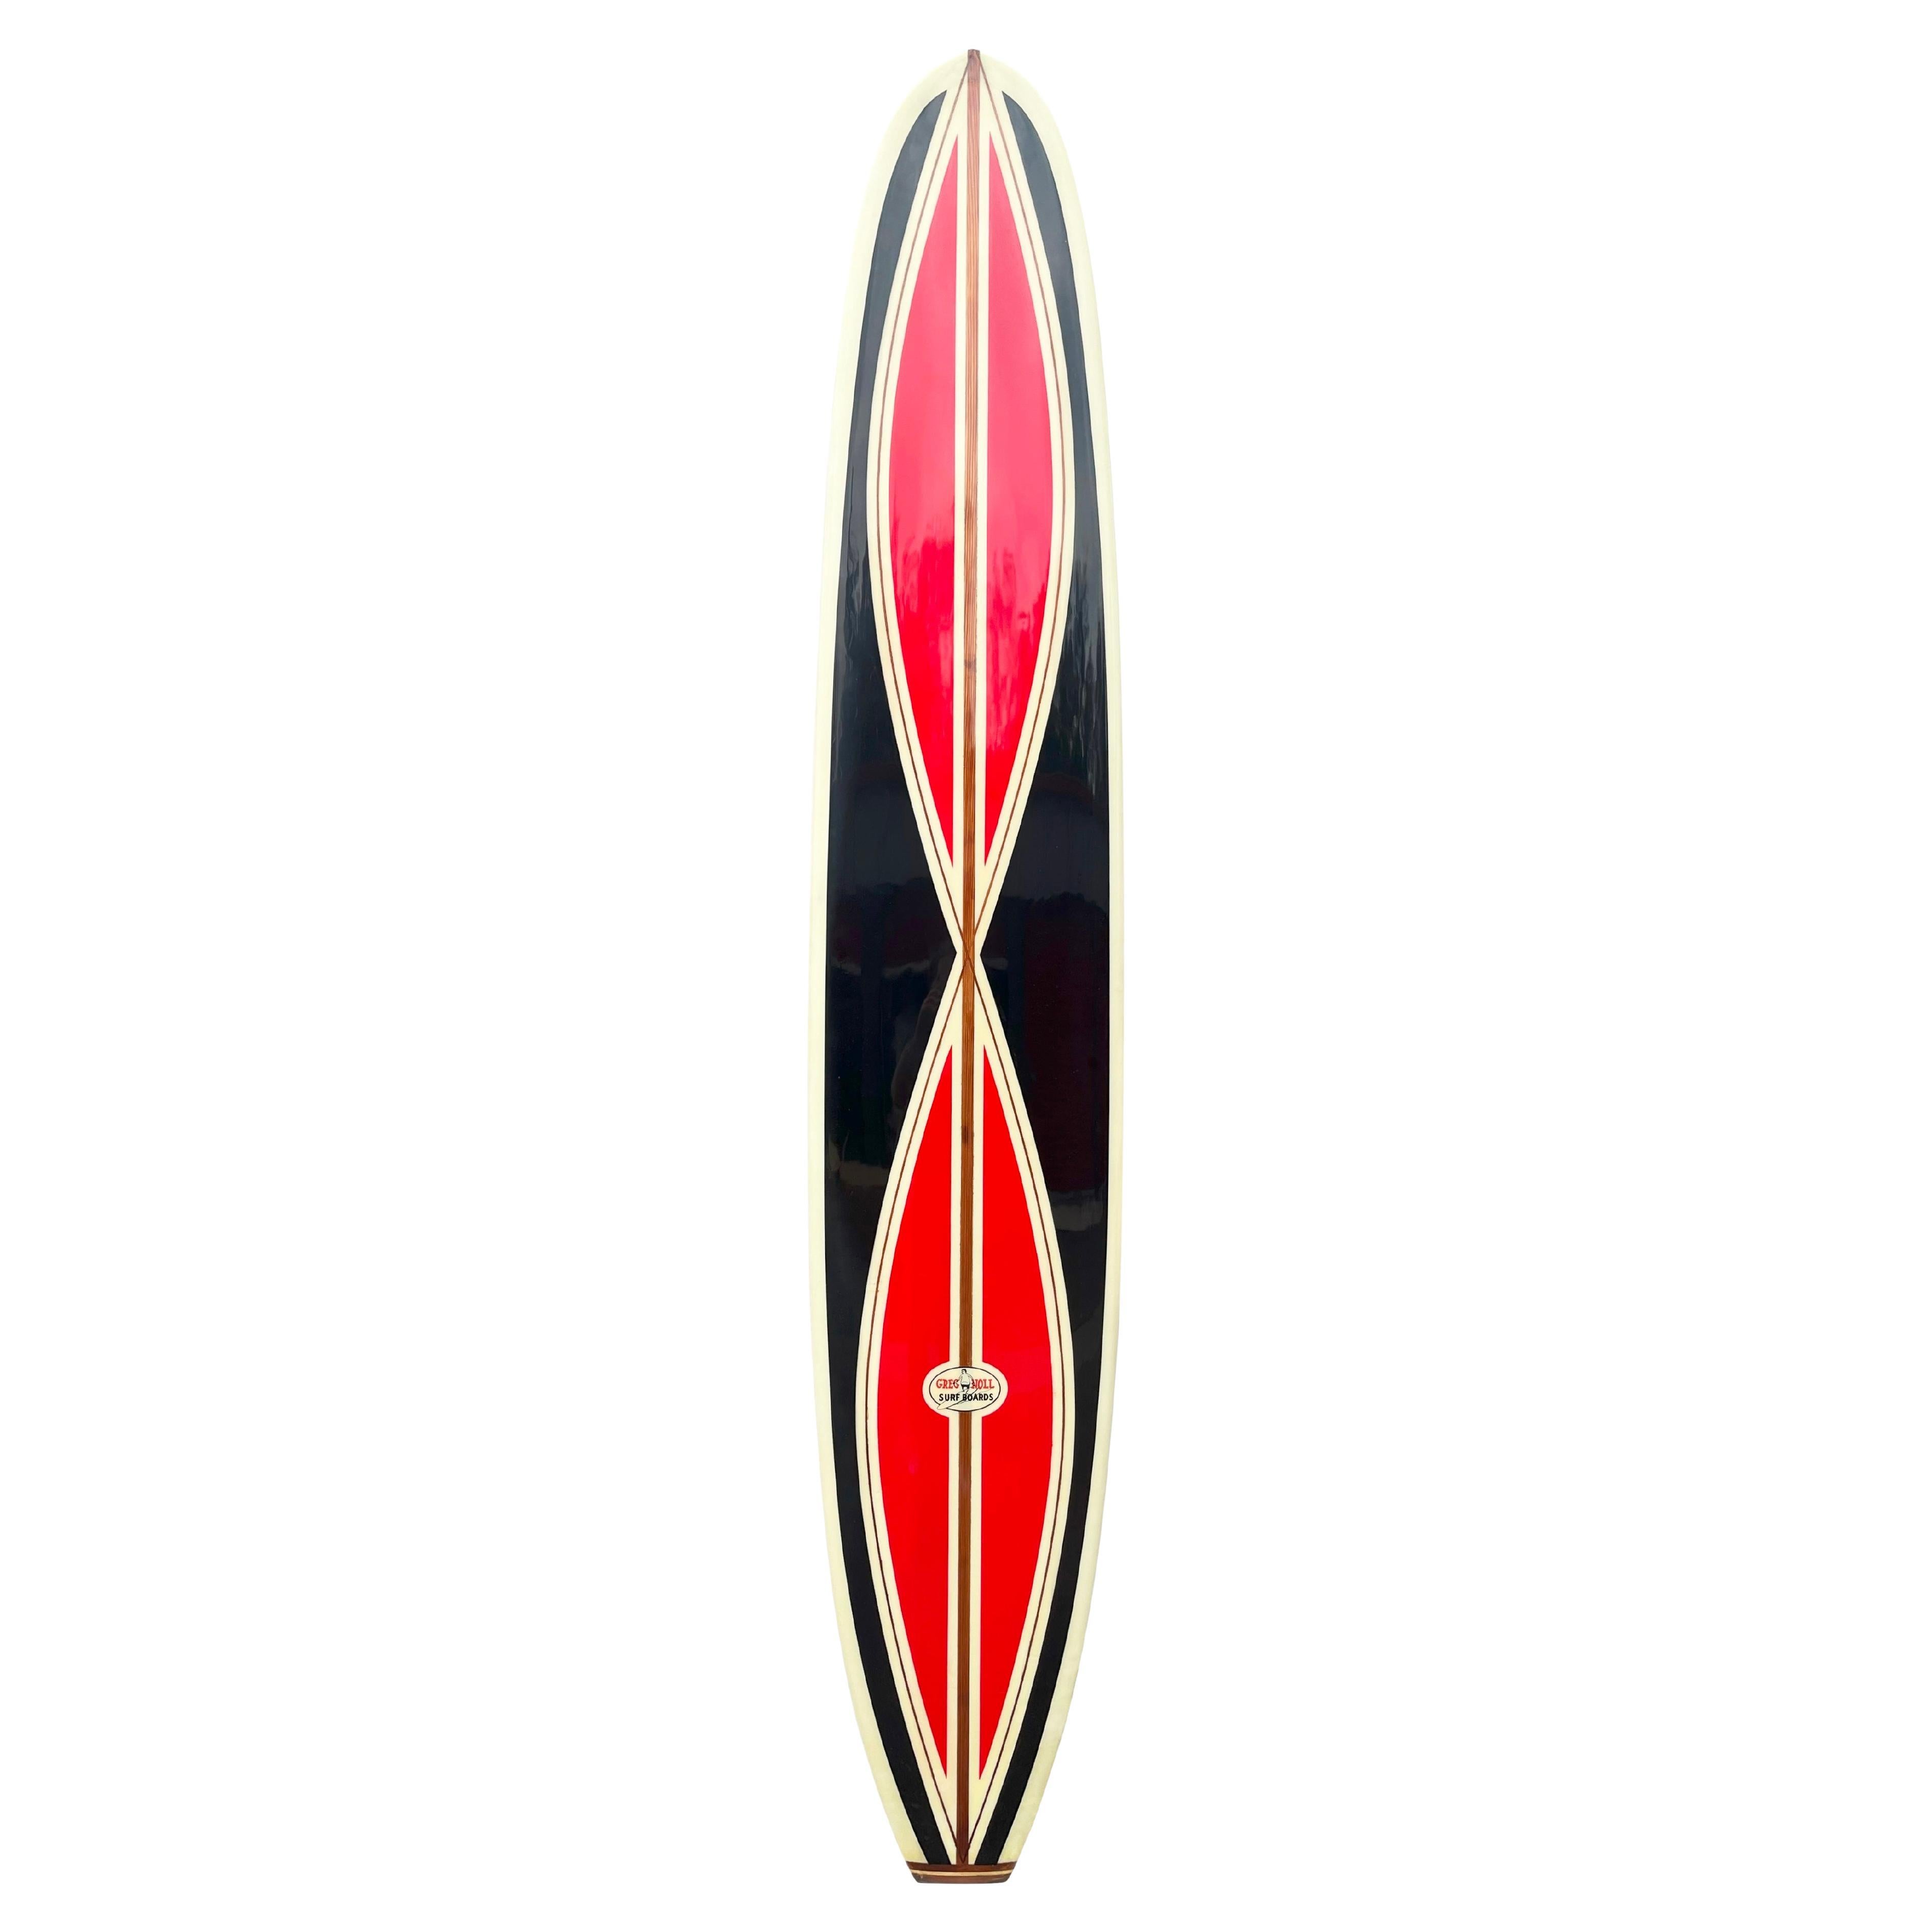 Vintage 1960s Greg Noll “S” stringer model longboard